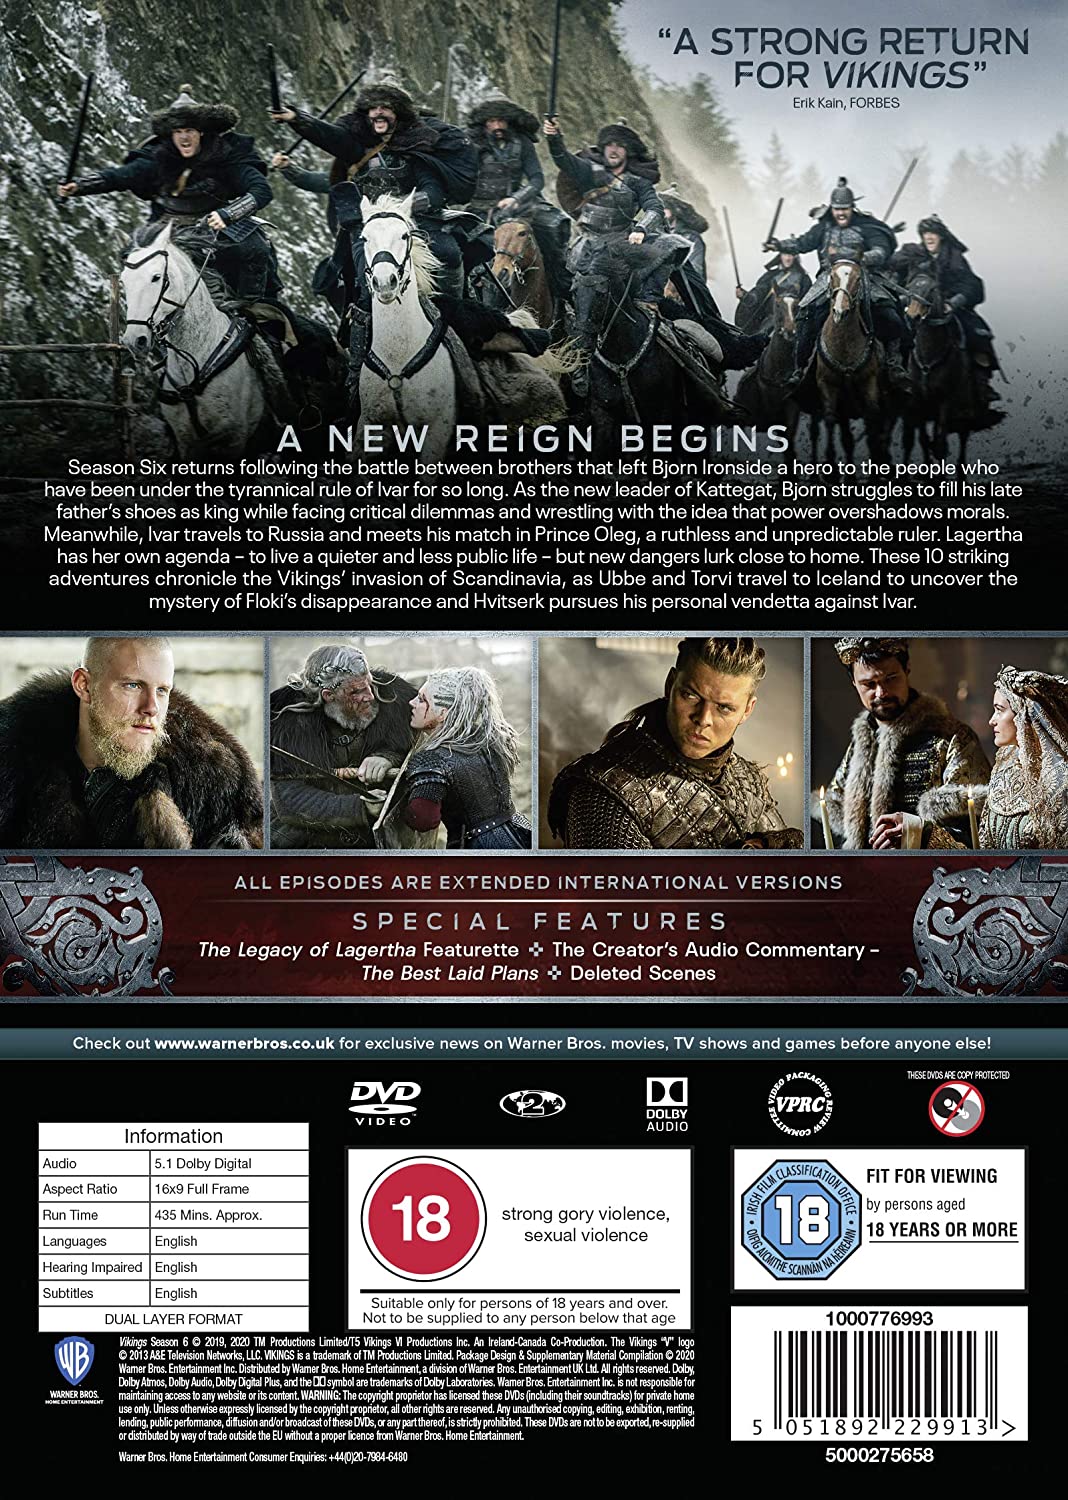 Vikings: Season 6 Volume 1 (DVD)